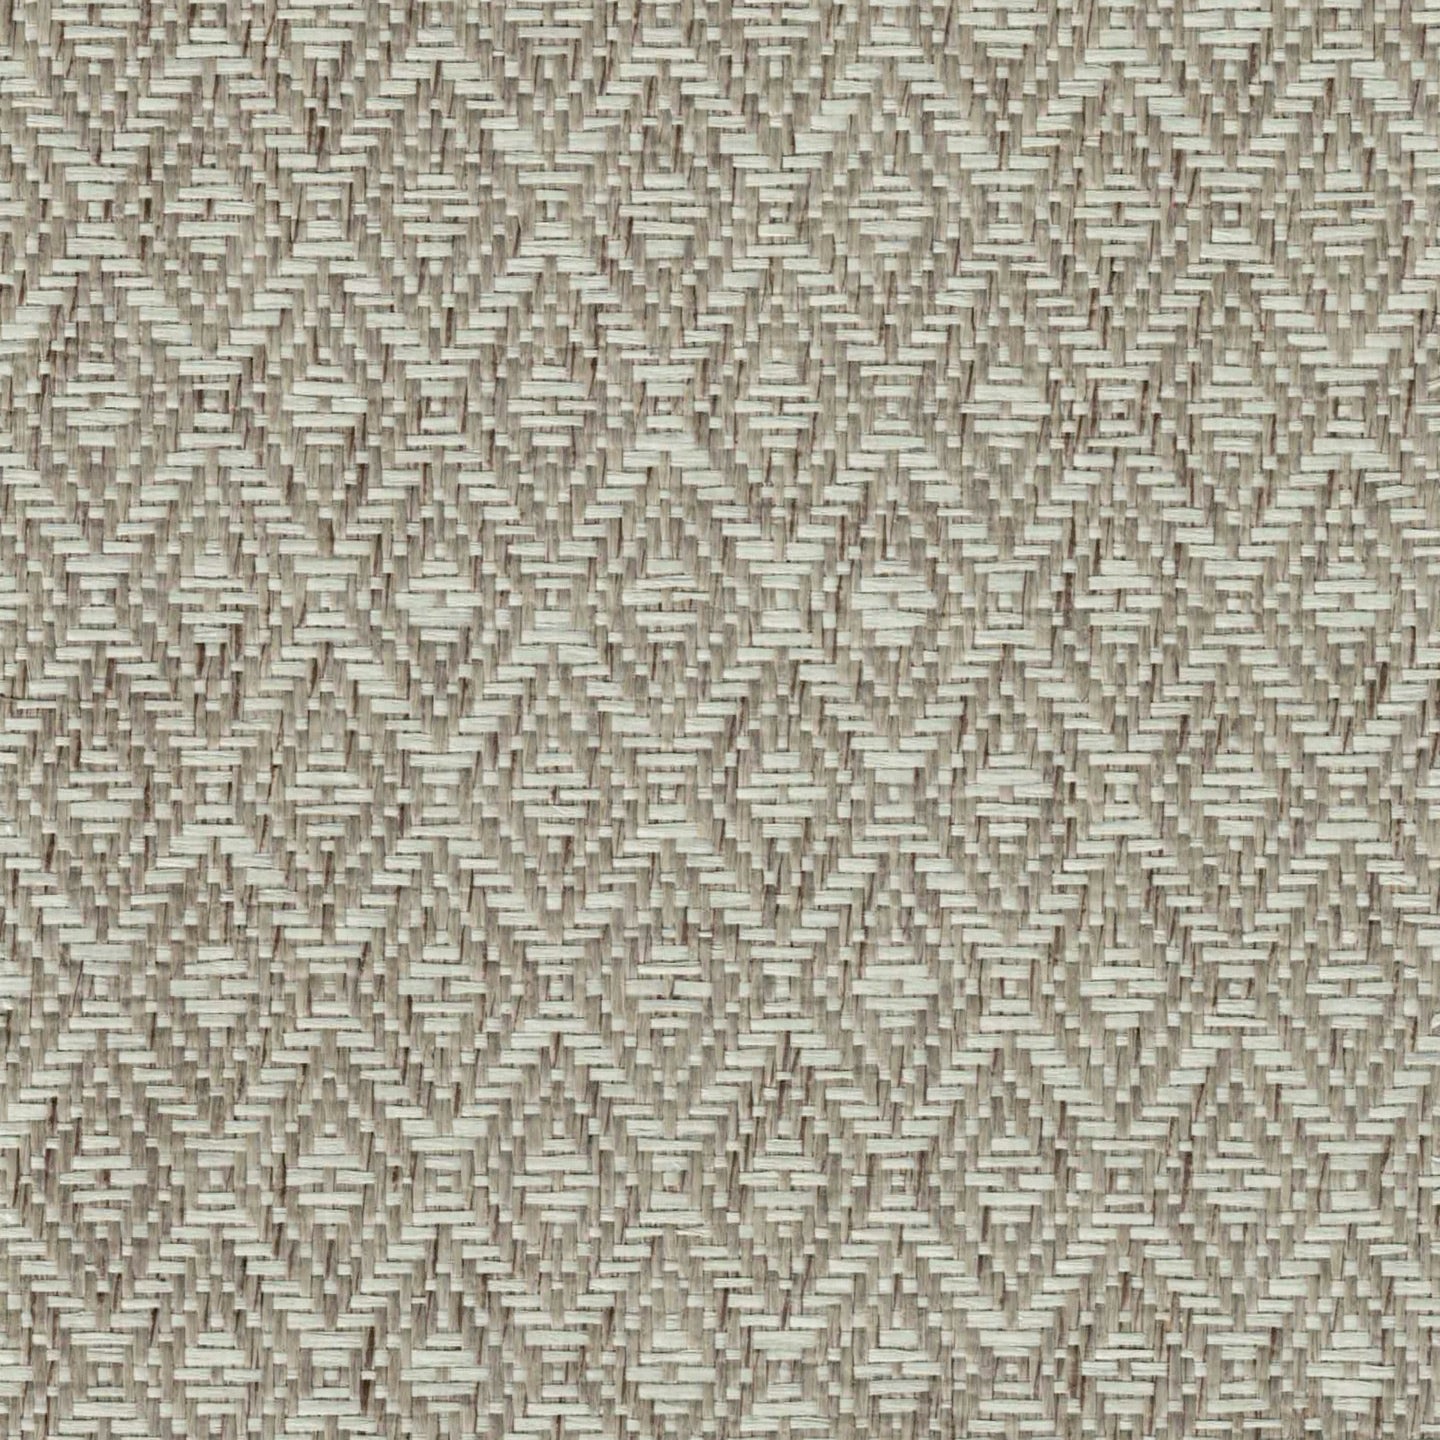 Brown Rice Paper Grassweave Wallpaper